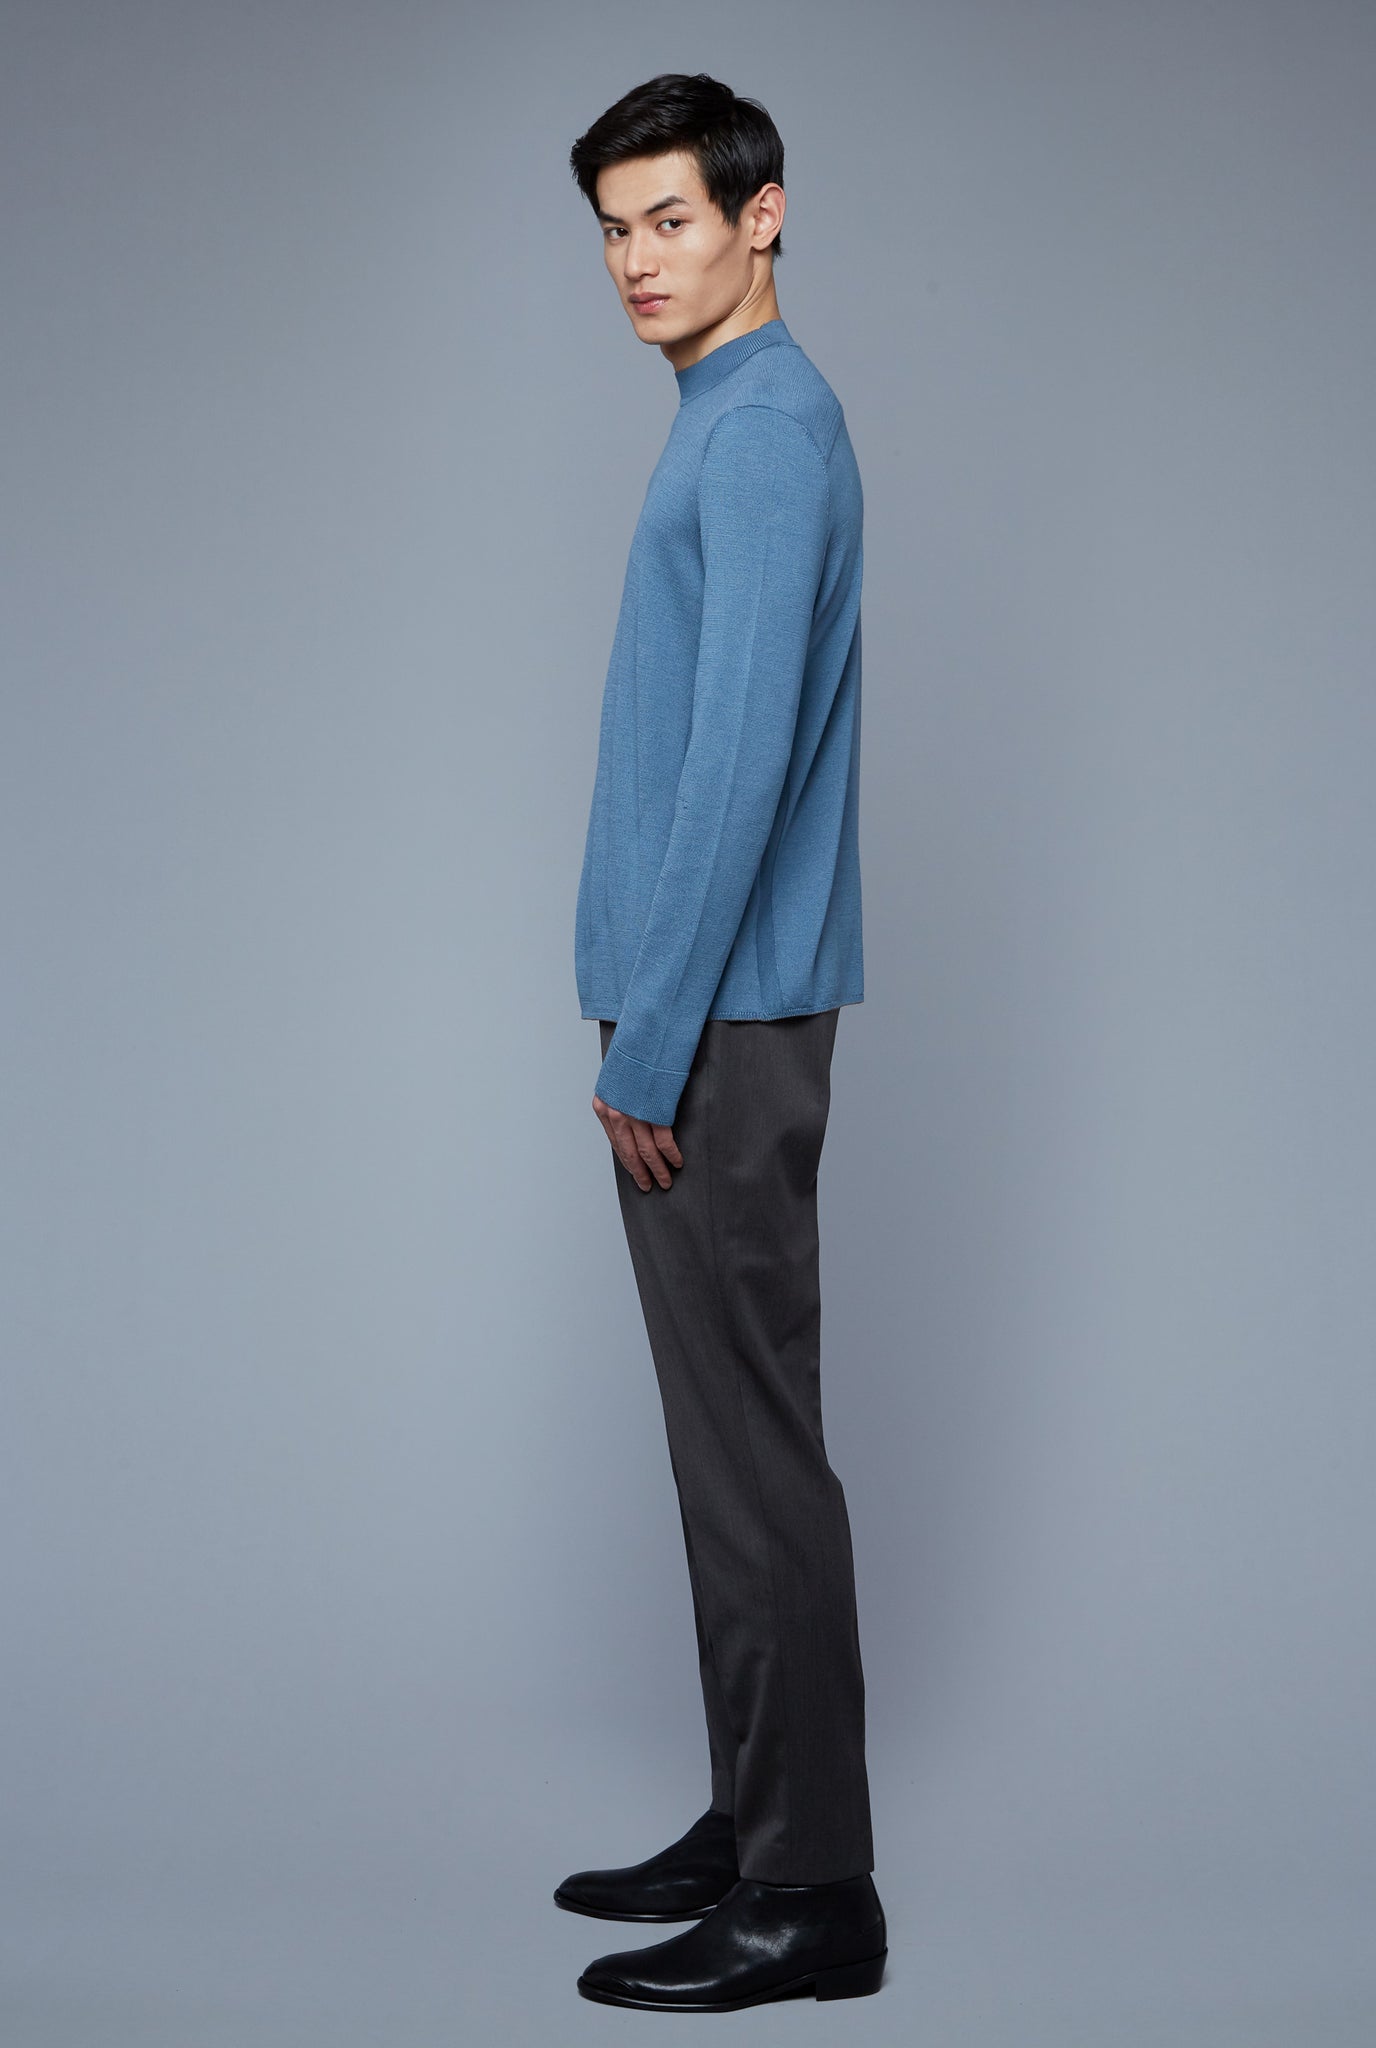 Side View: Model Qiang Li wearing Royal Neck Sweater Tee